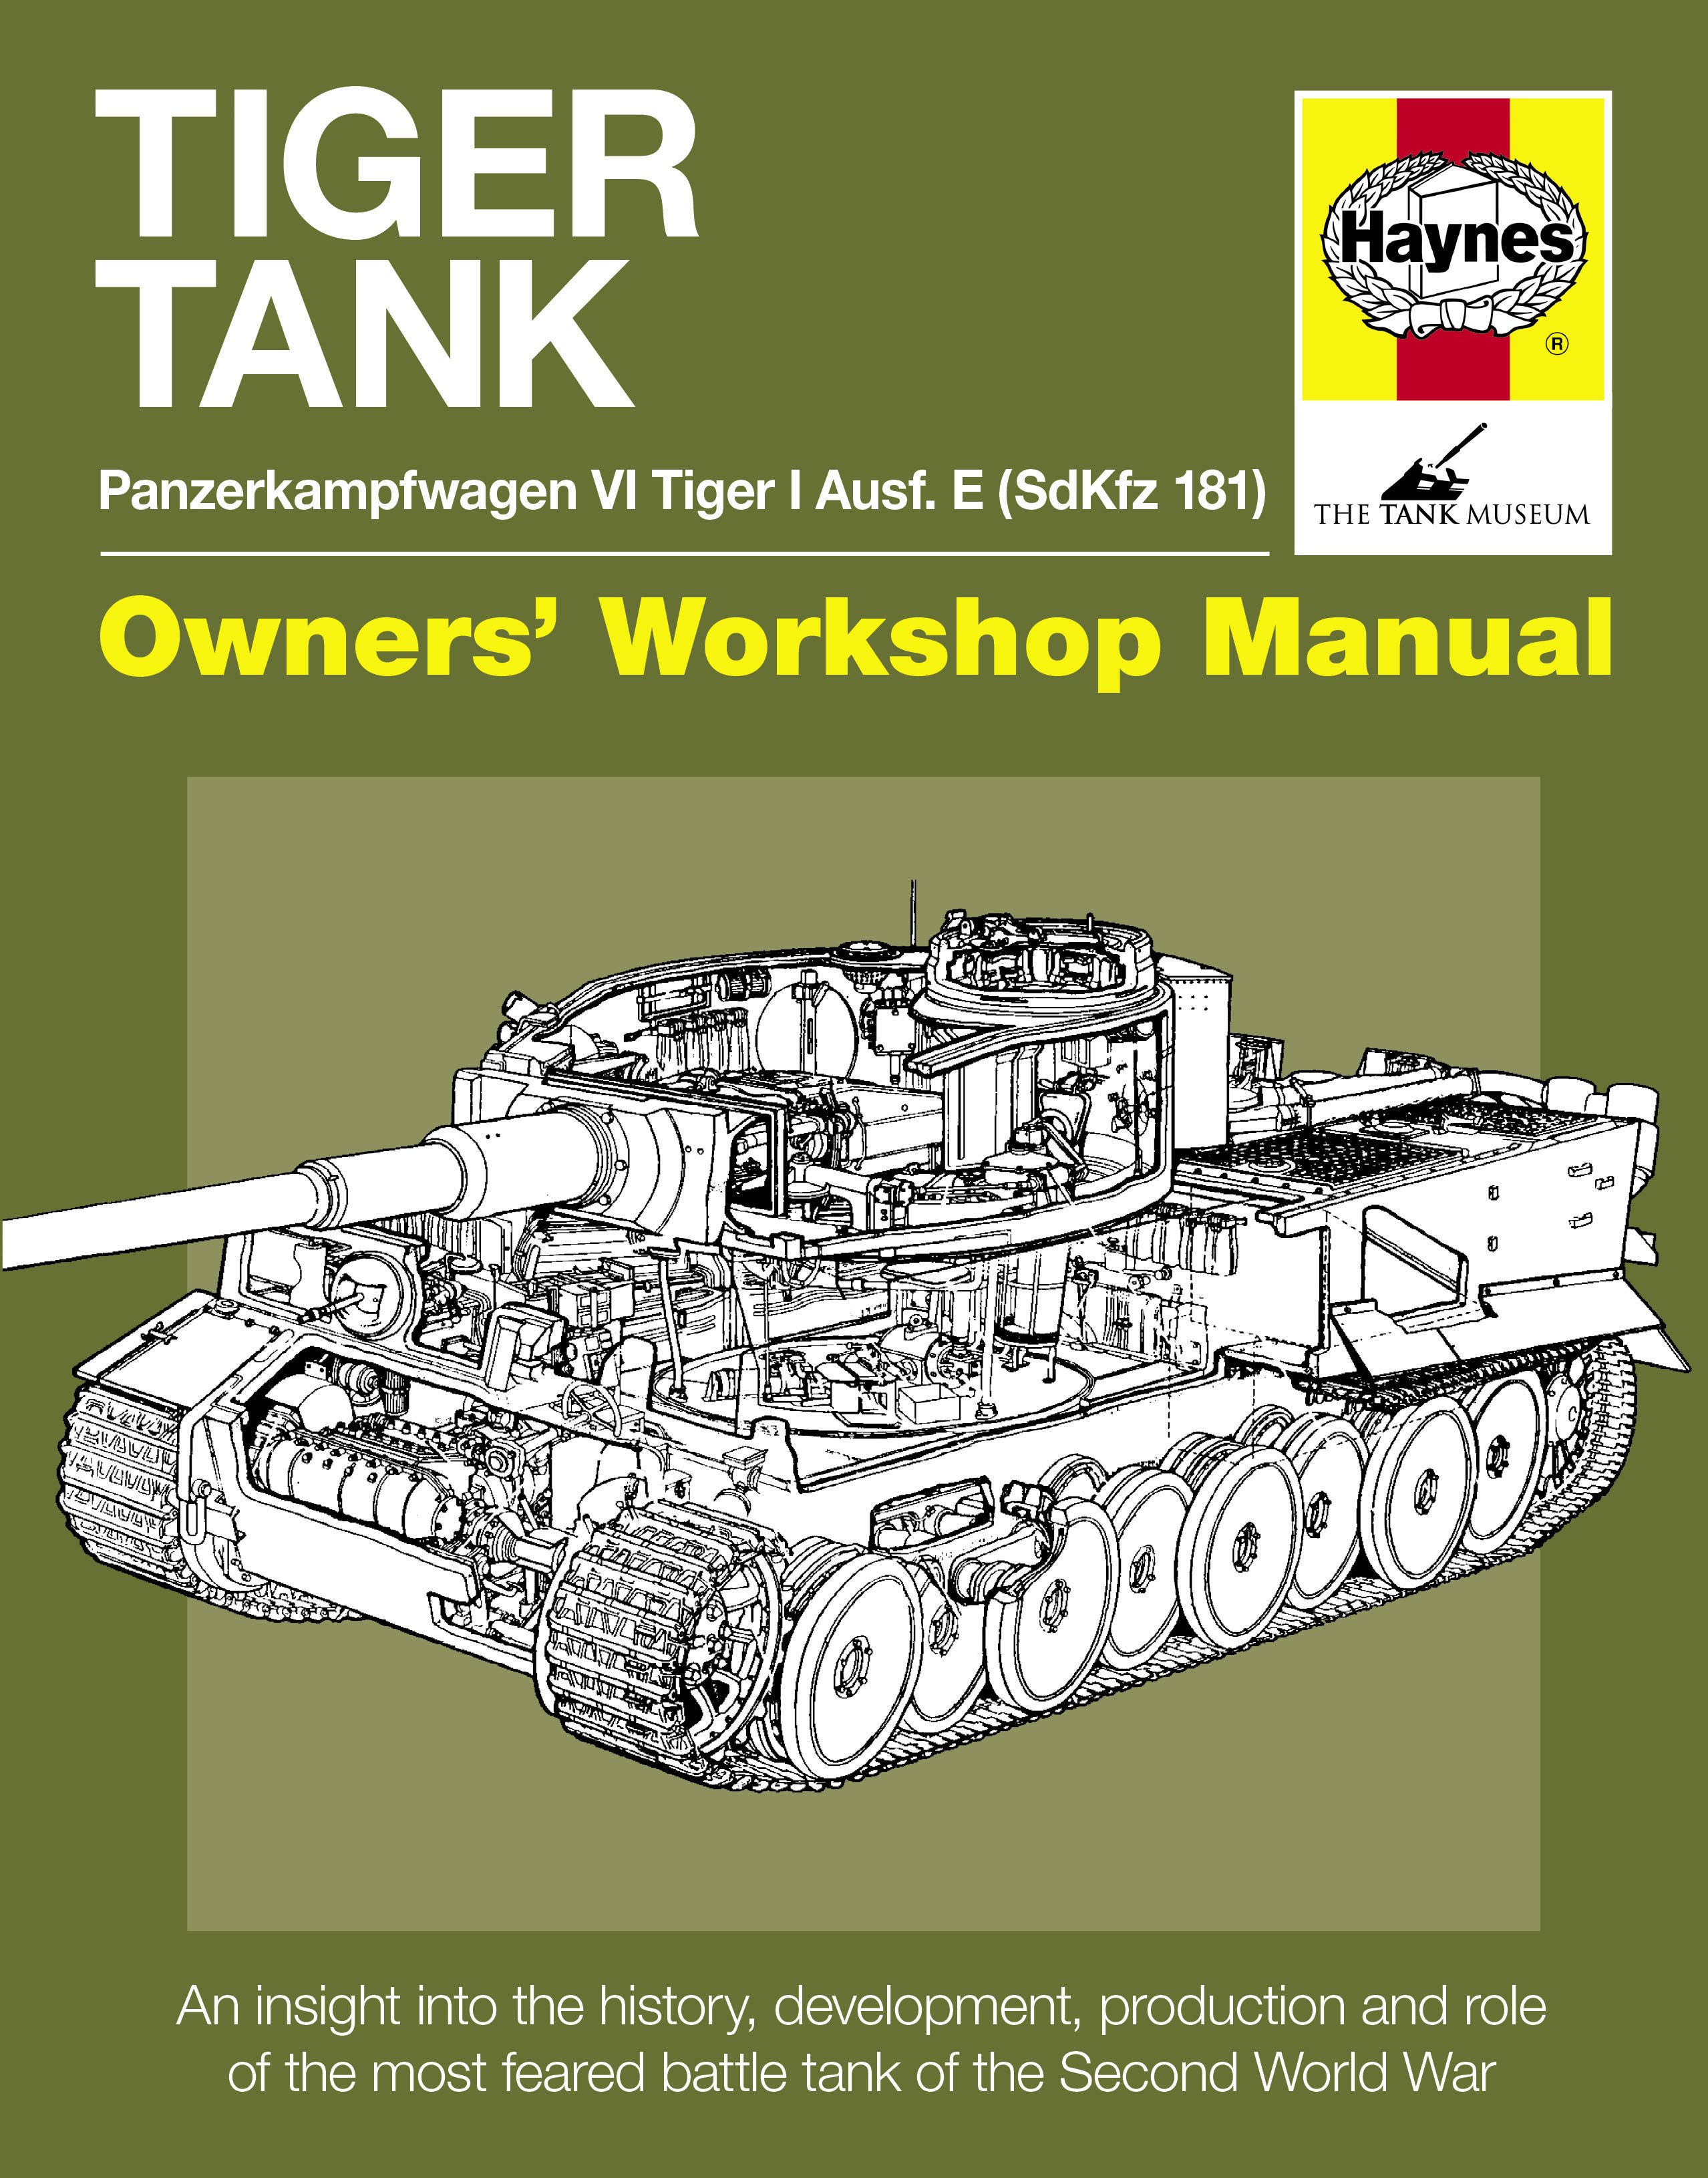 Win a Haynes Manual tank bundle worth £68